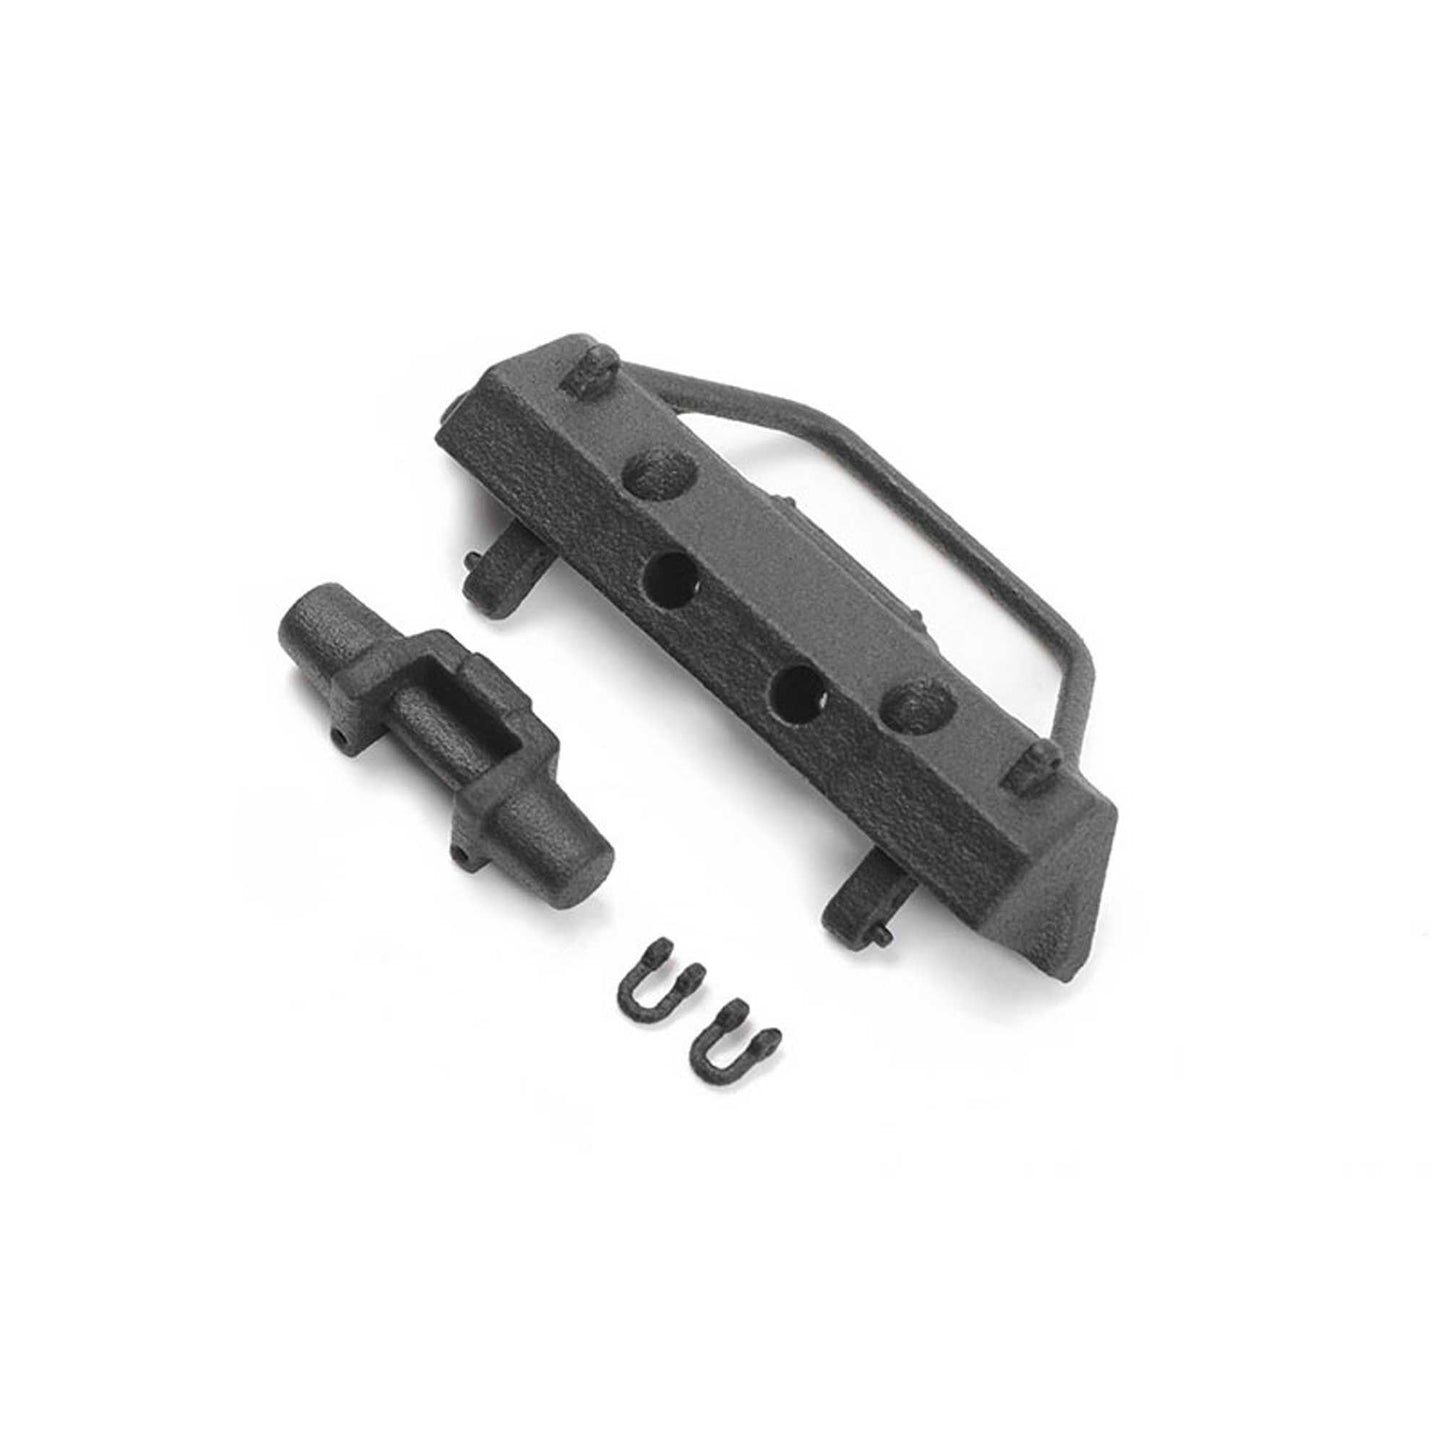 Micro Series Front Bumper w/ Plastic Winch for Axial SCX24 1/24 Jeep Wrangler RTR